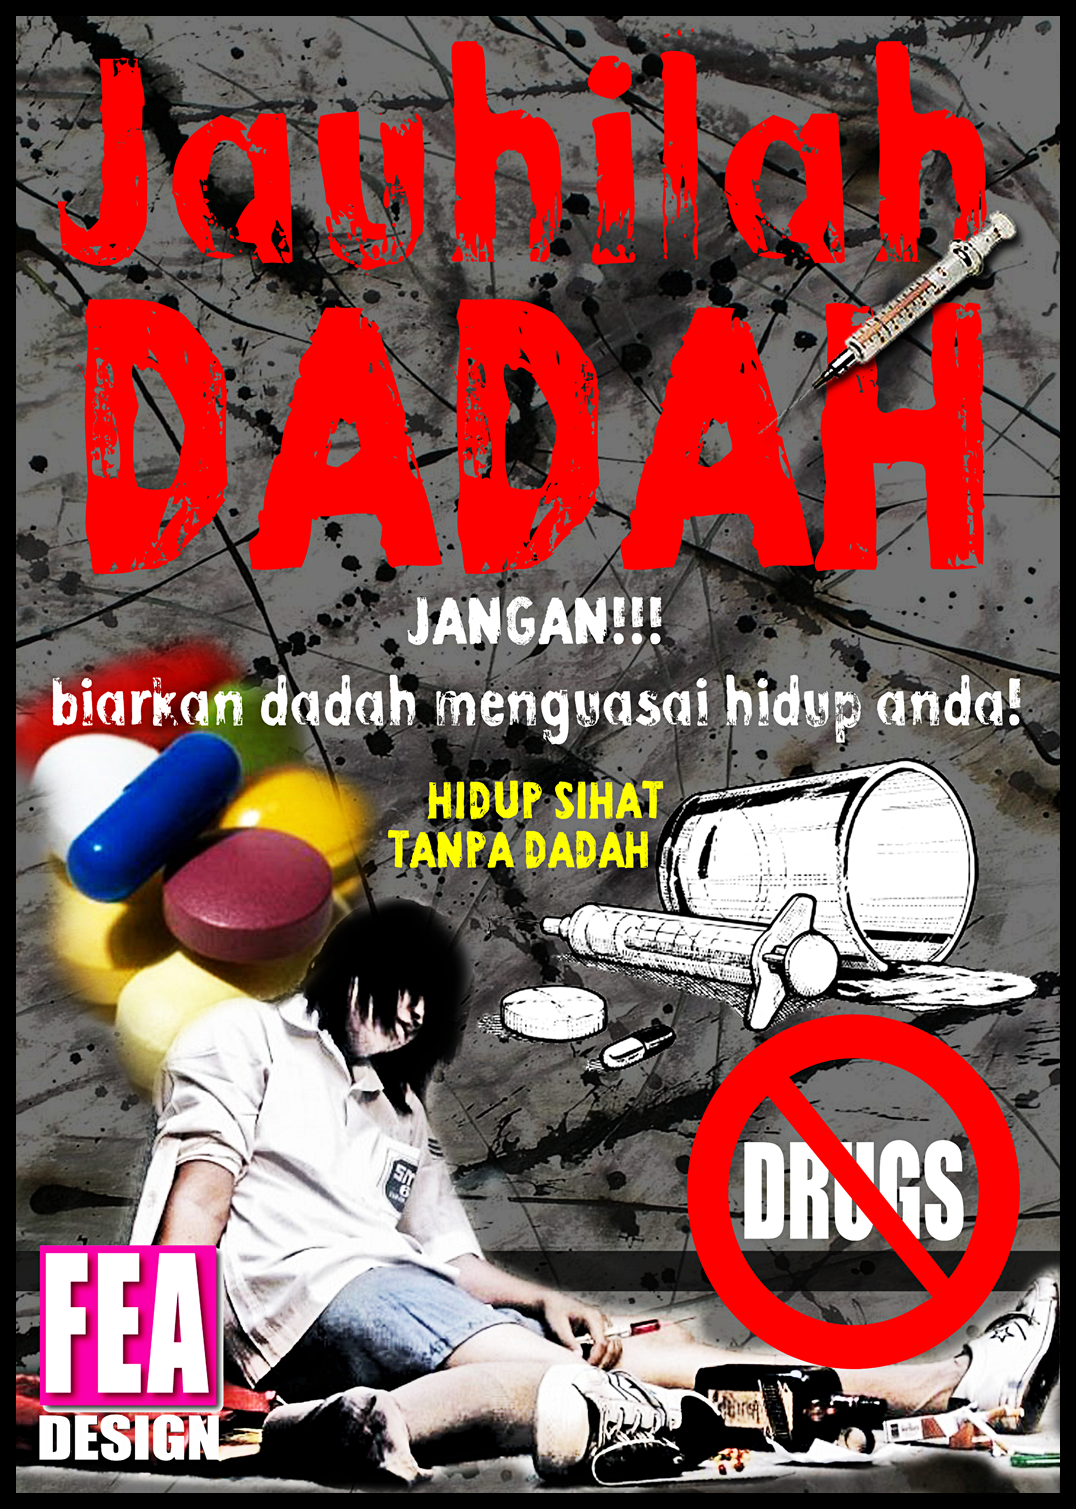 Contoh poster anti dadah  2013